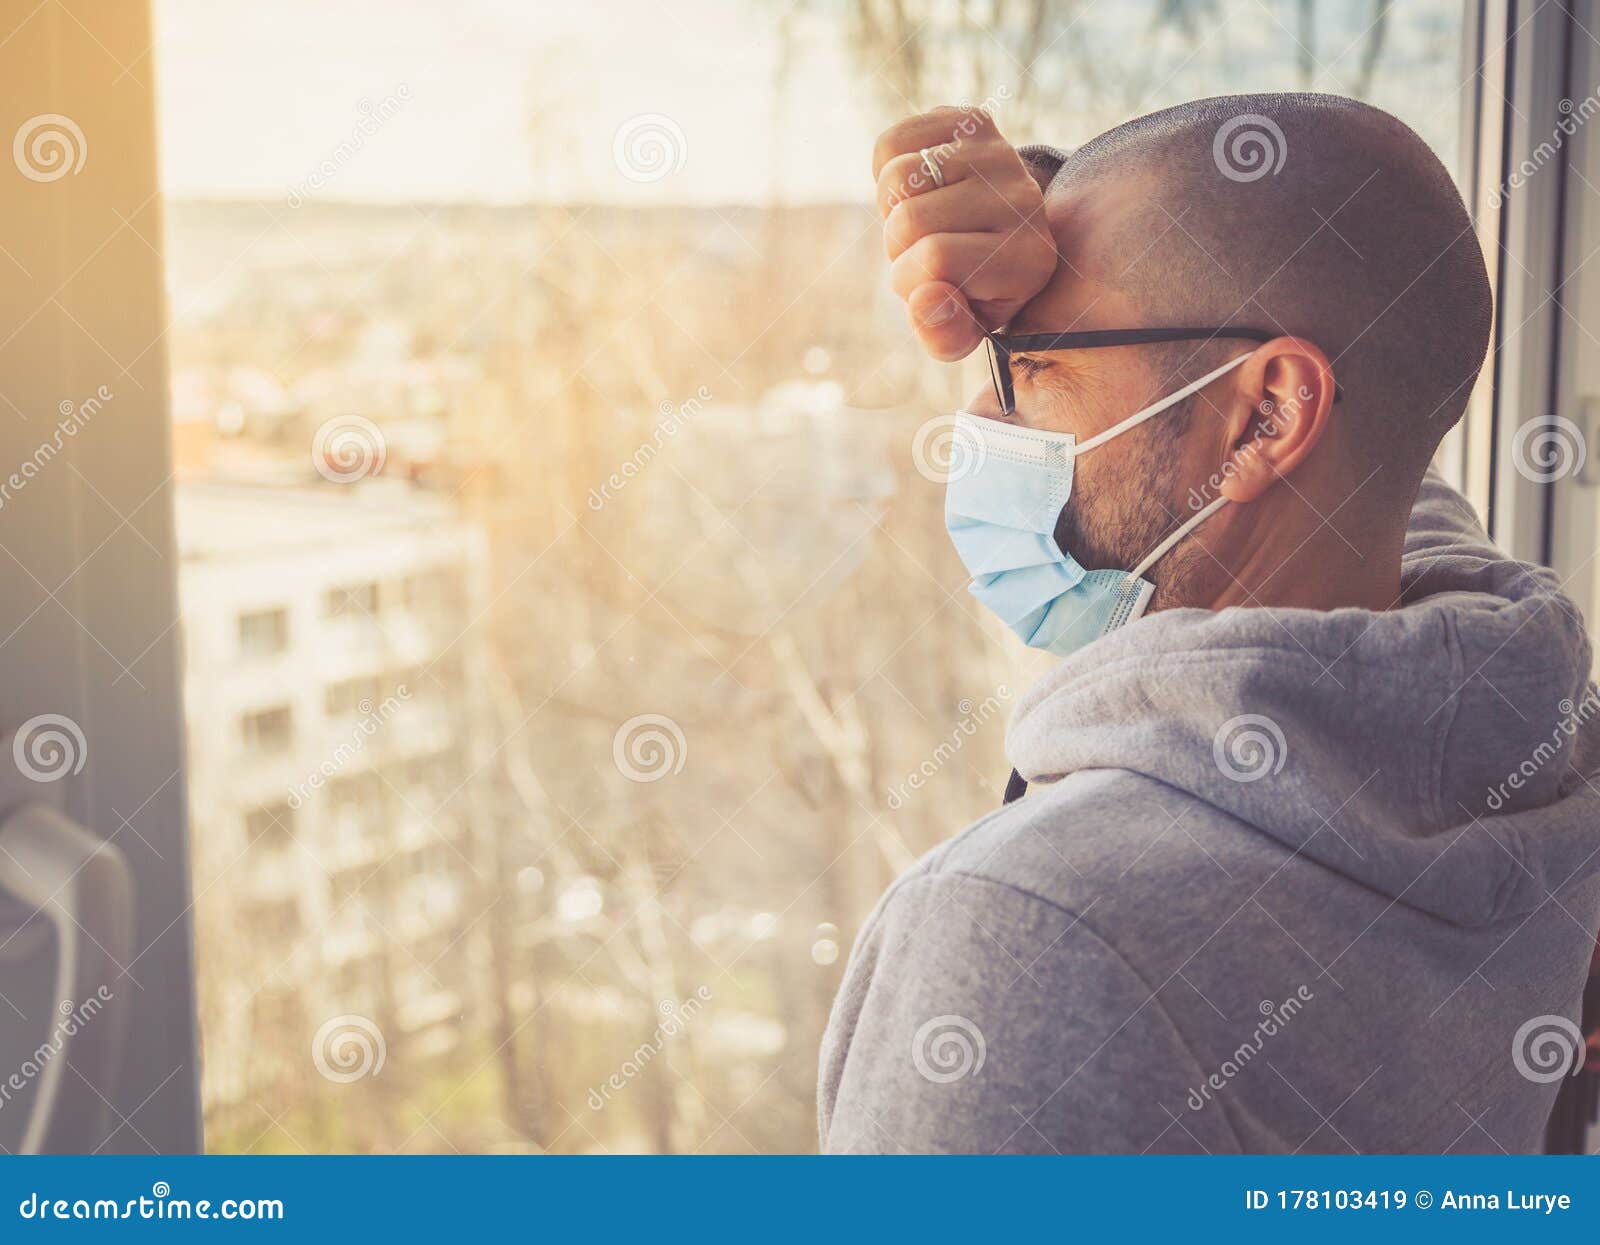 man in medical mask in home quarantine